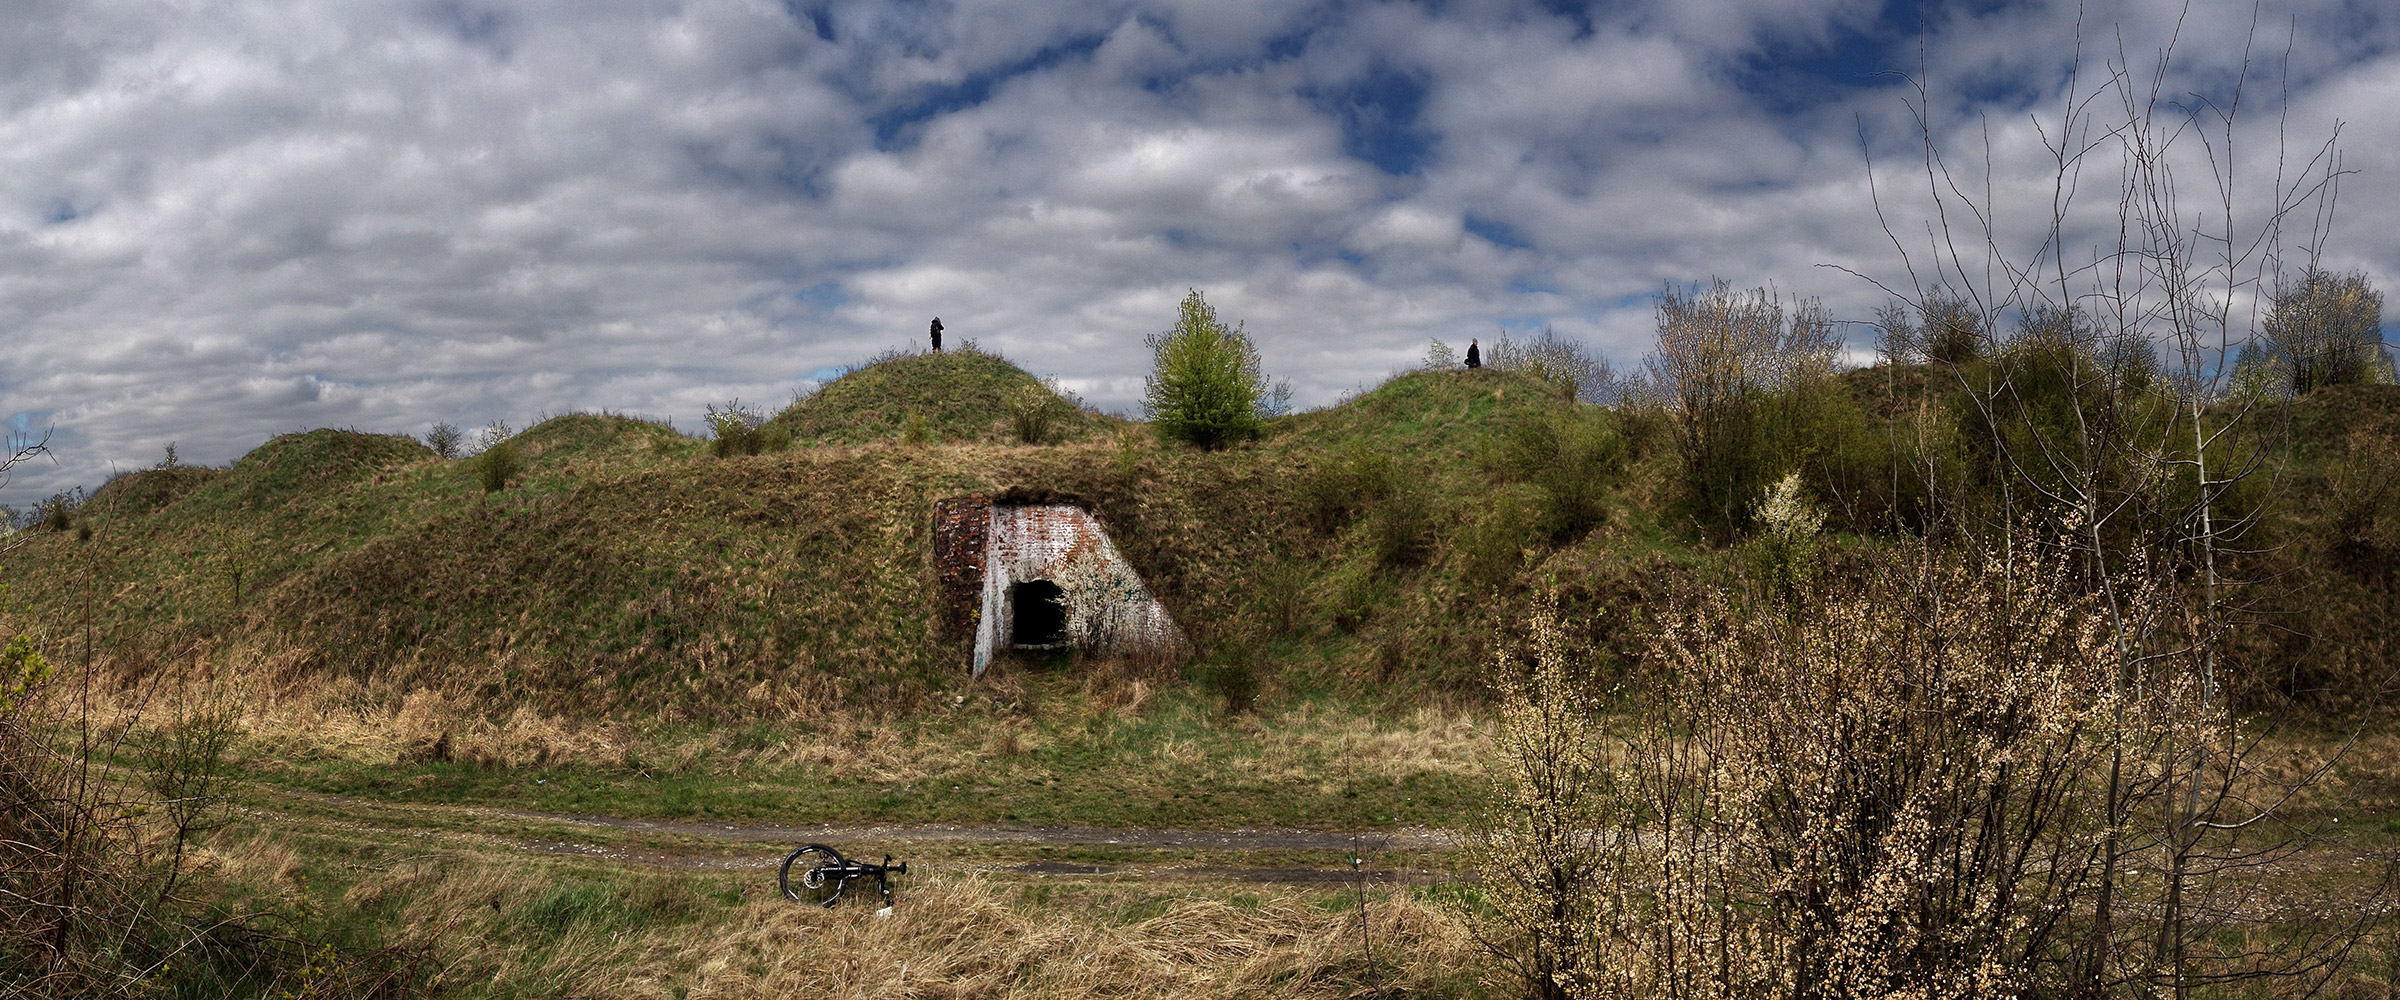 PANORAMA DIARY | Iphoneography blog | Fort Mierzwiaczka, Dęblin, Poland